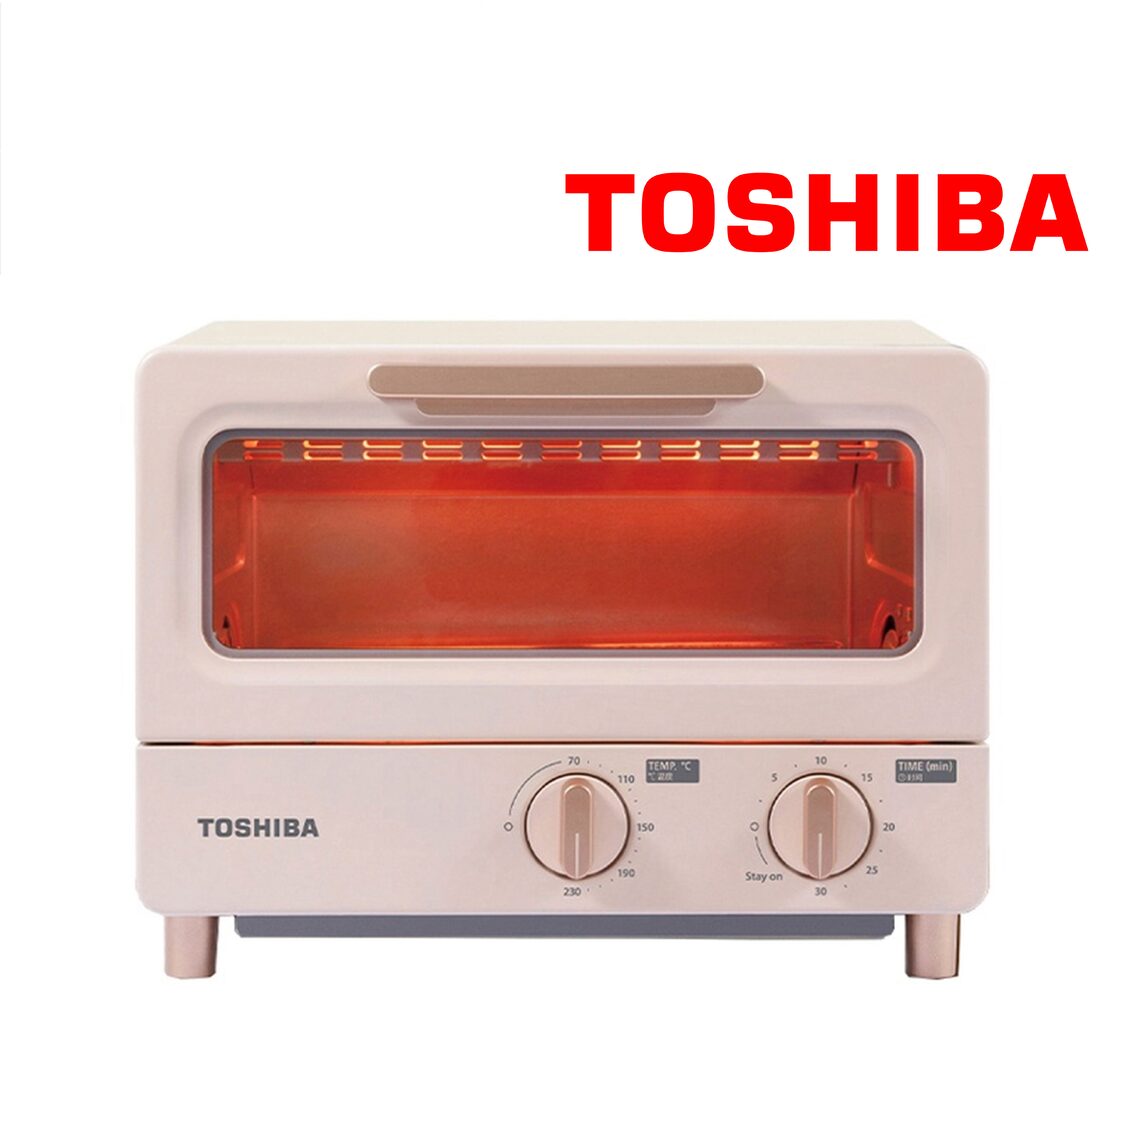 TOSHIBA 8L MINI TOASTER OVEN